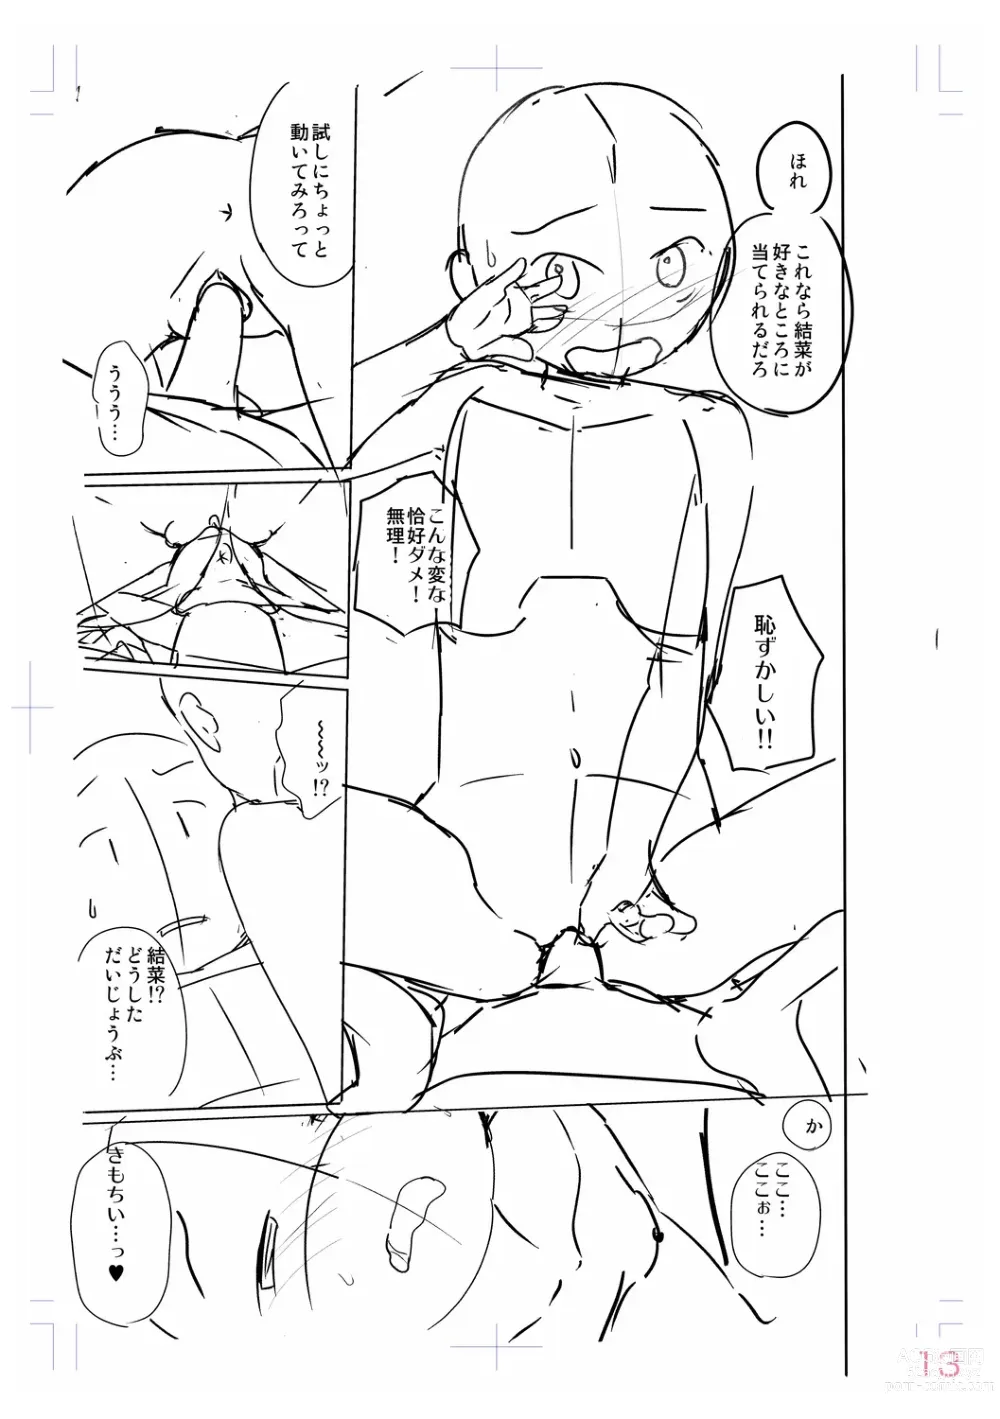 Page 239 of manga Shishunki wa Ichido dake - The one and only adolescence.